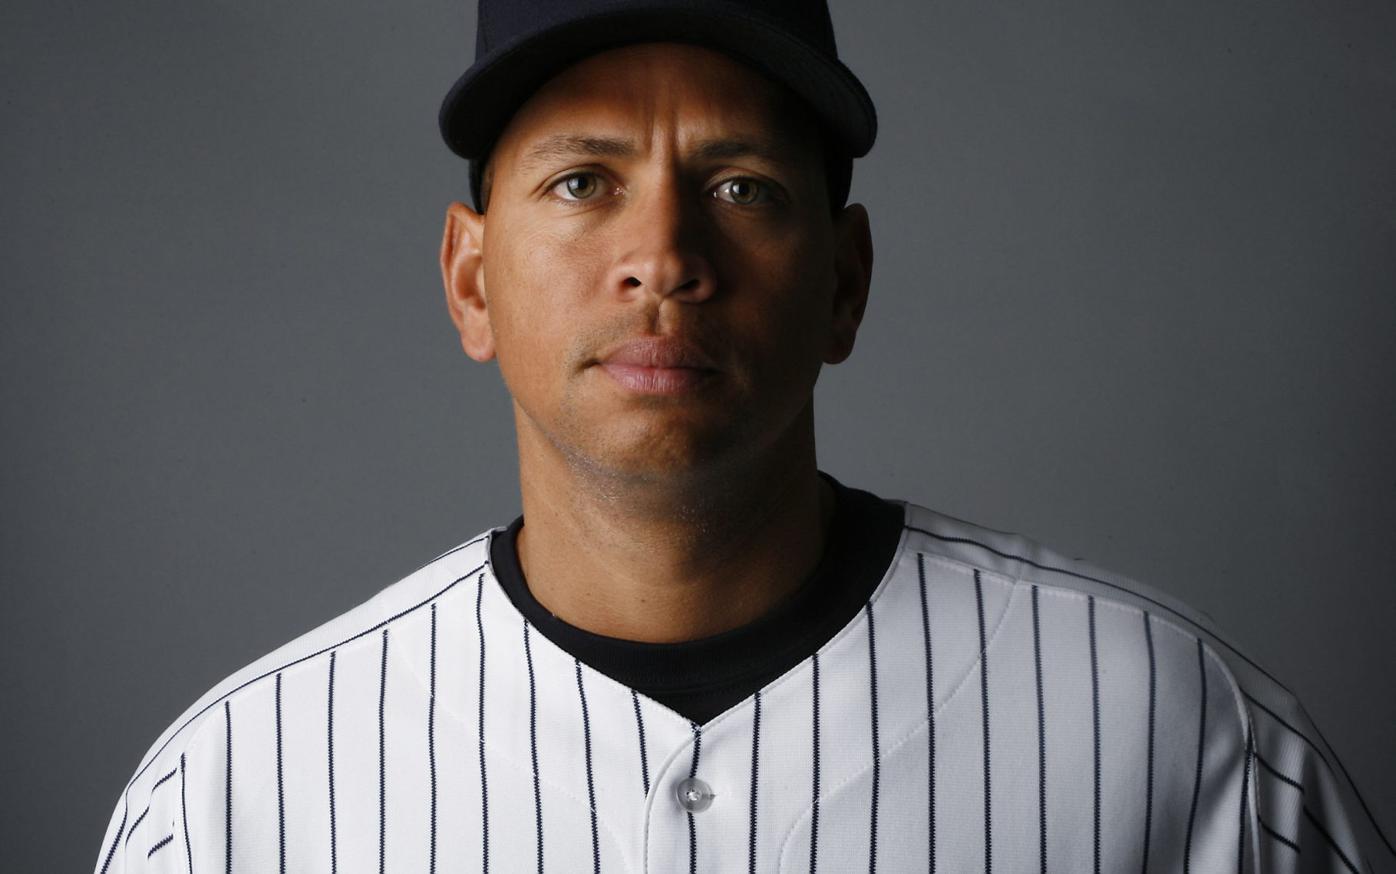 Report: Alex Rodriguez, Melky Cabrera Among Baseball Stars Linked